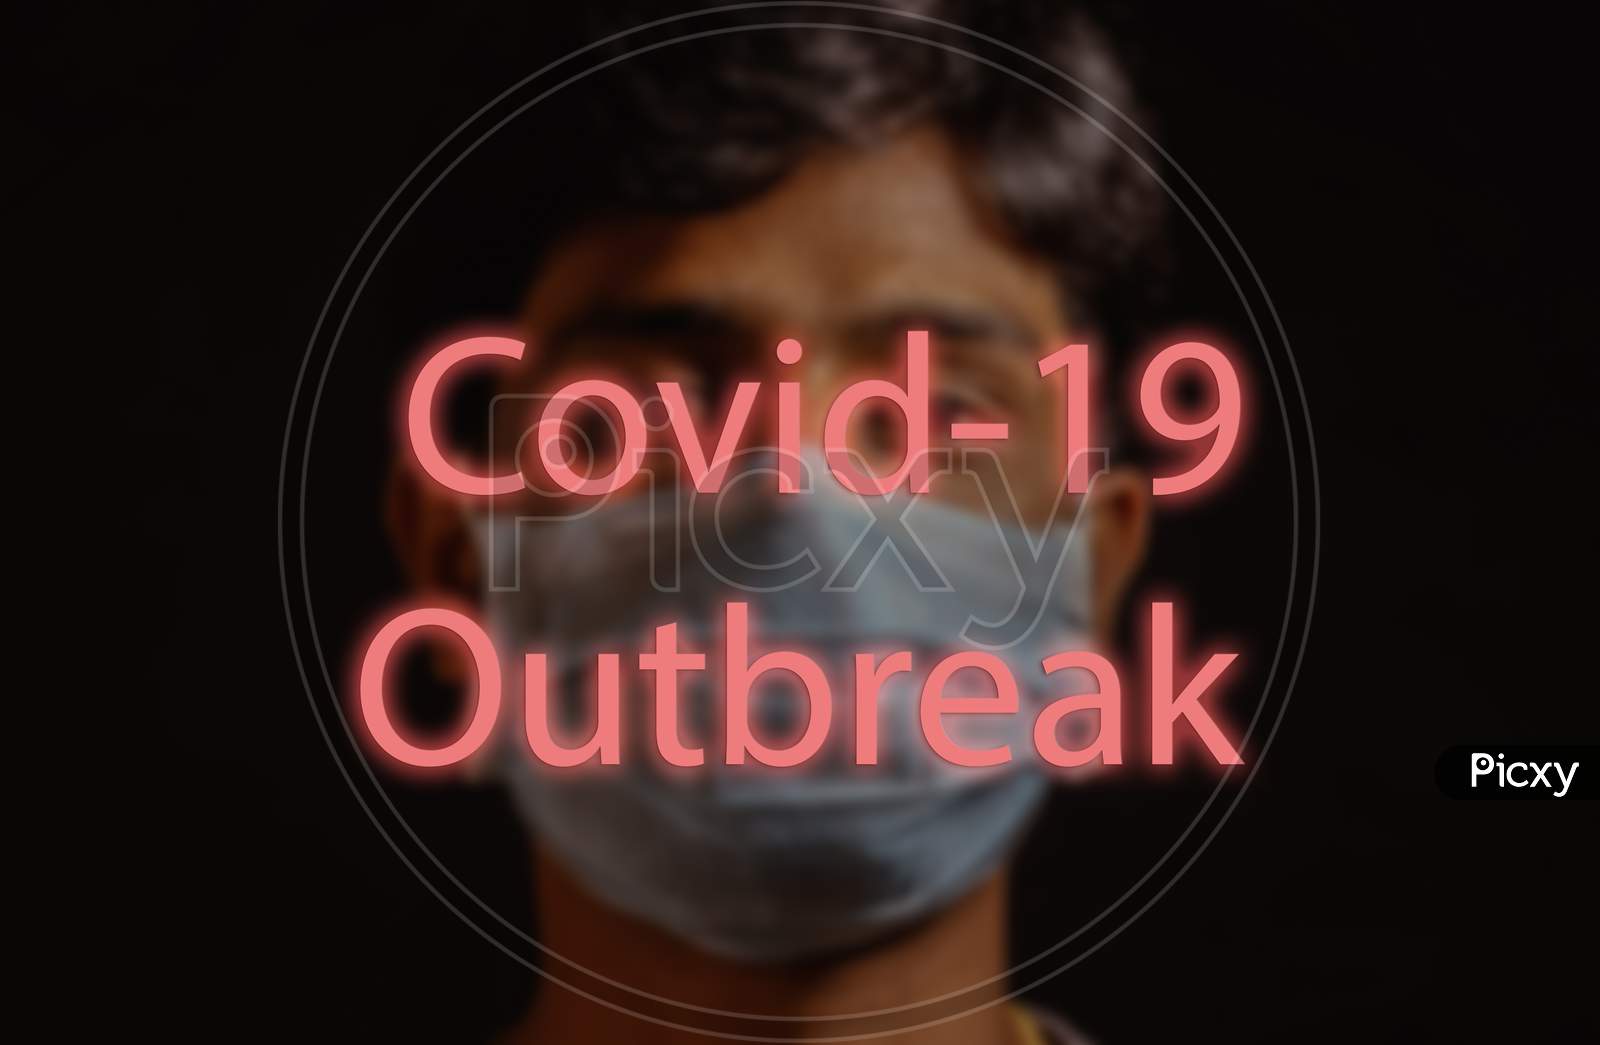 Covid-19 Wuhan Novel Coronavirus Or 2019-Ncov, Man With Blue Medical Face Mask On Background And Written Covid-19 Outbreak. Concept Of Coronavirus Quarantine Outbreak.